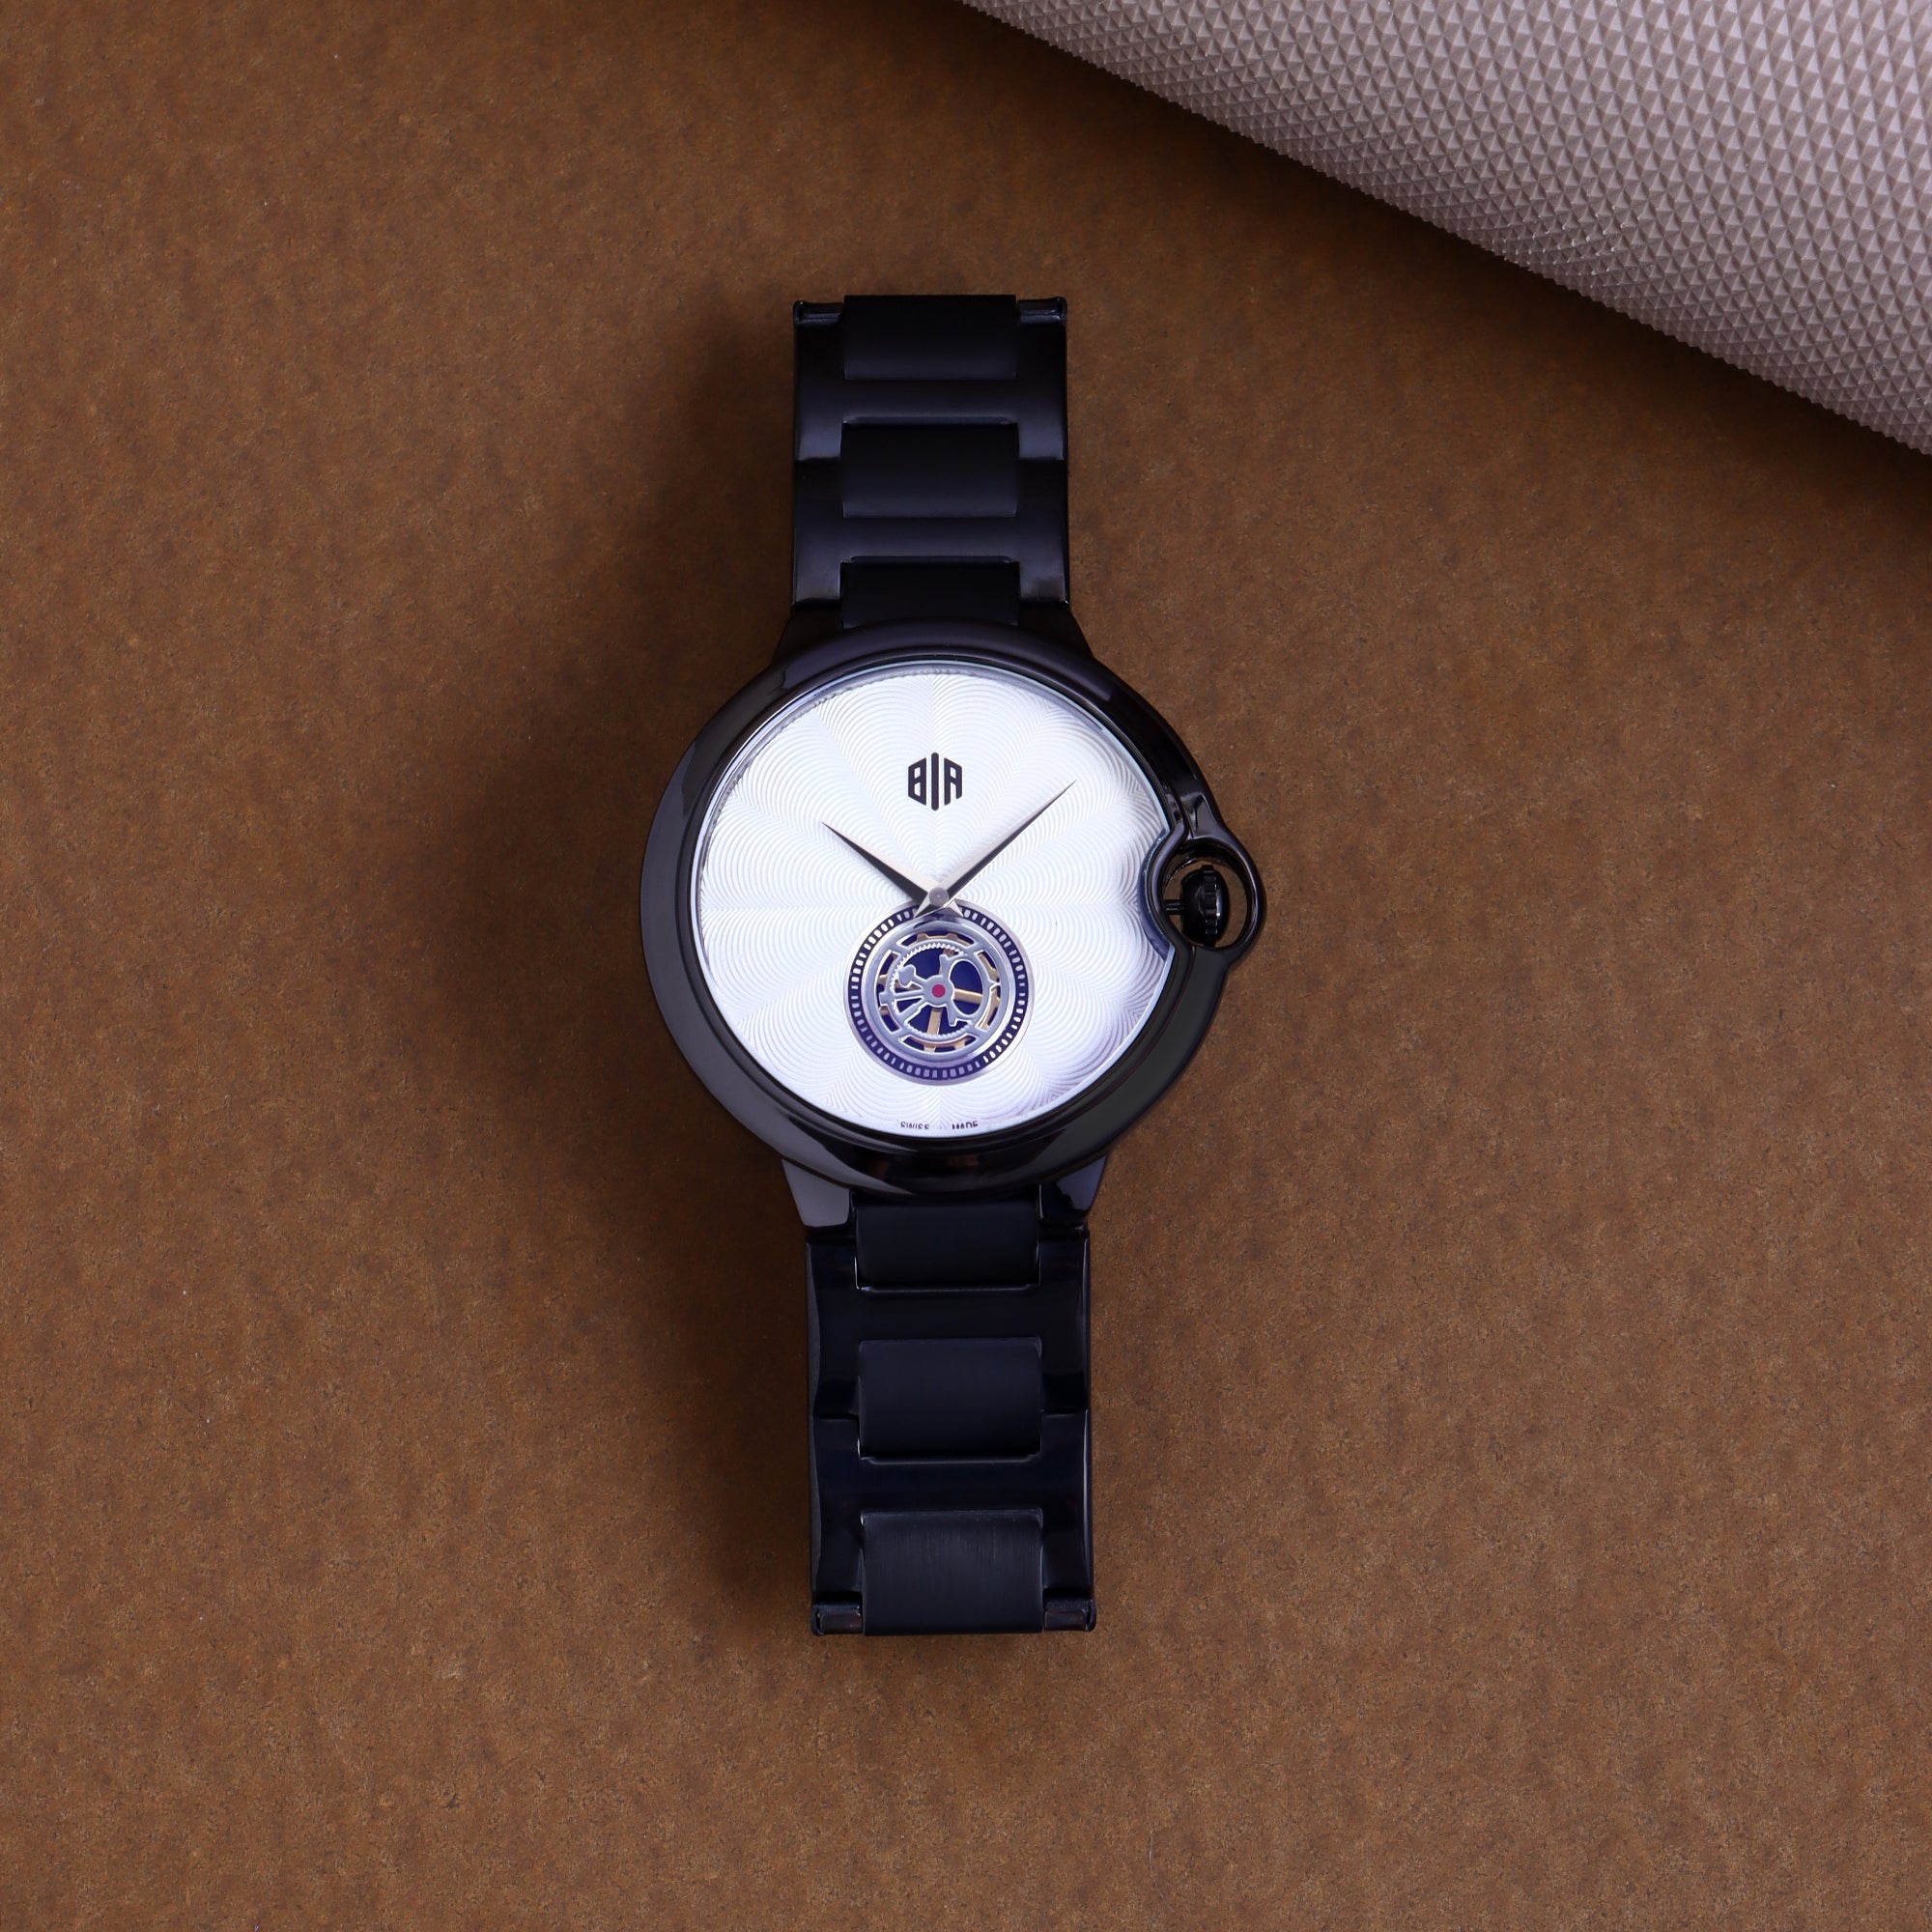 BrandAdda Luxurious Mens Black and White Analogue Stainless Steel Belt Watch